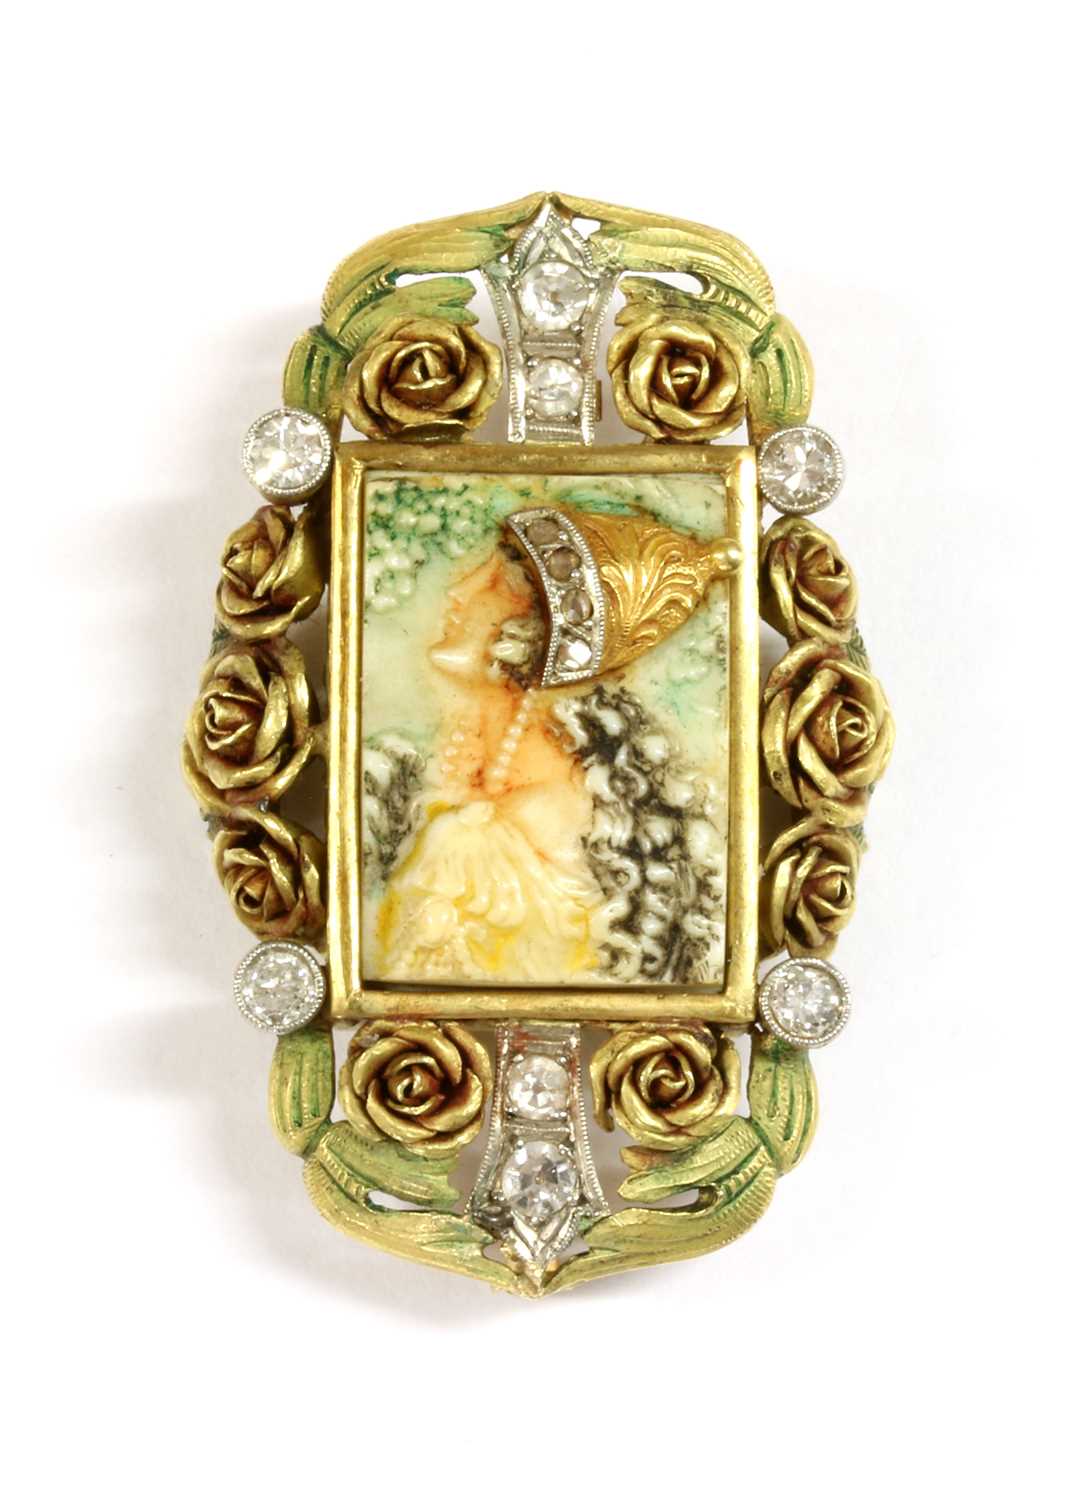 An Art Nouveau diamond ivory and enamel brooch/pendant,